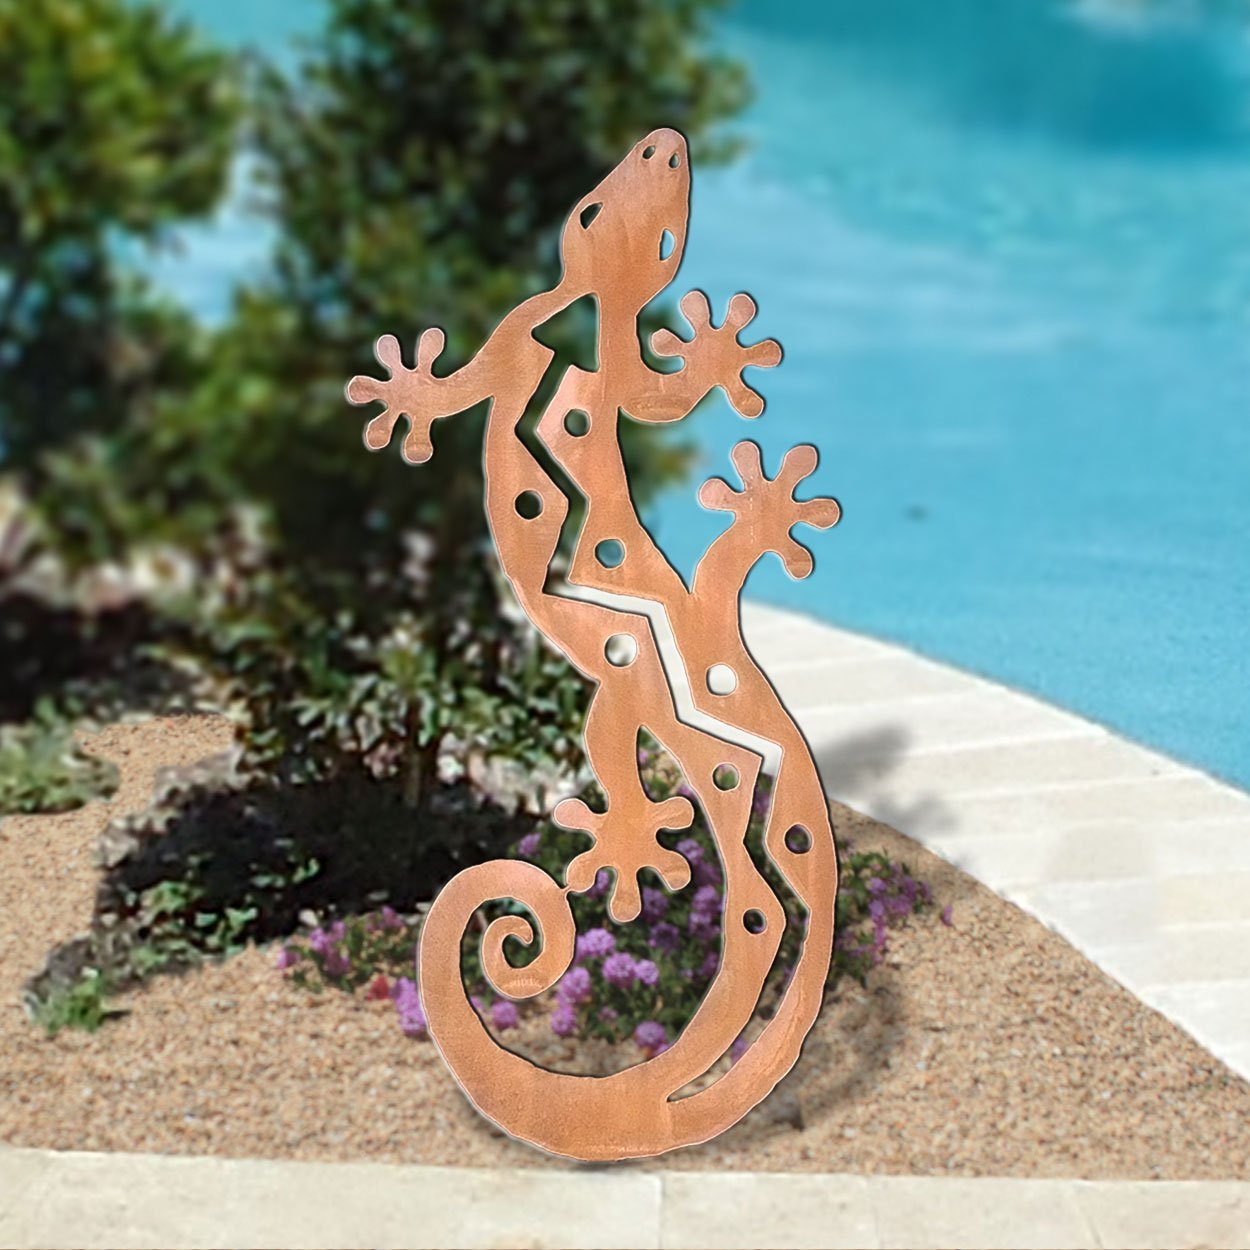 165592 - 24in Southwest Decor Gecko Lizard Metal Yard Art Statue in Rust Finish